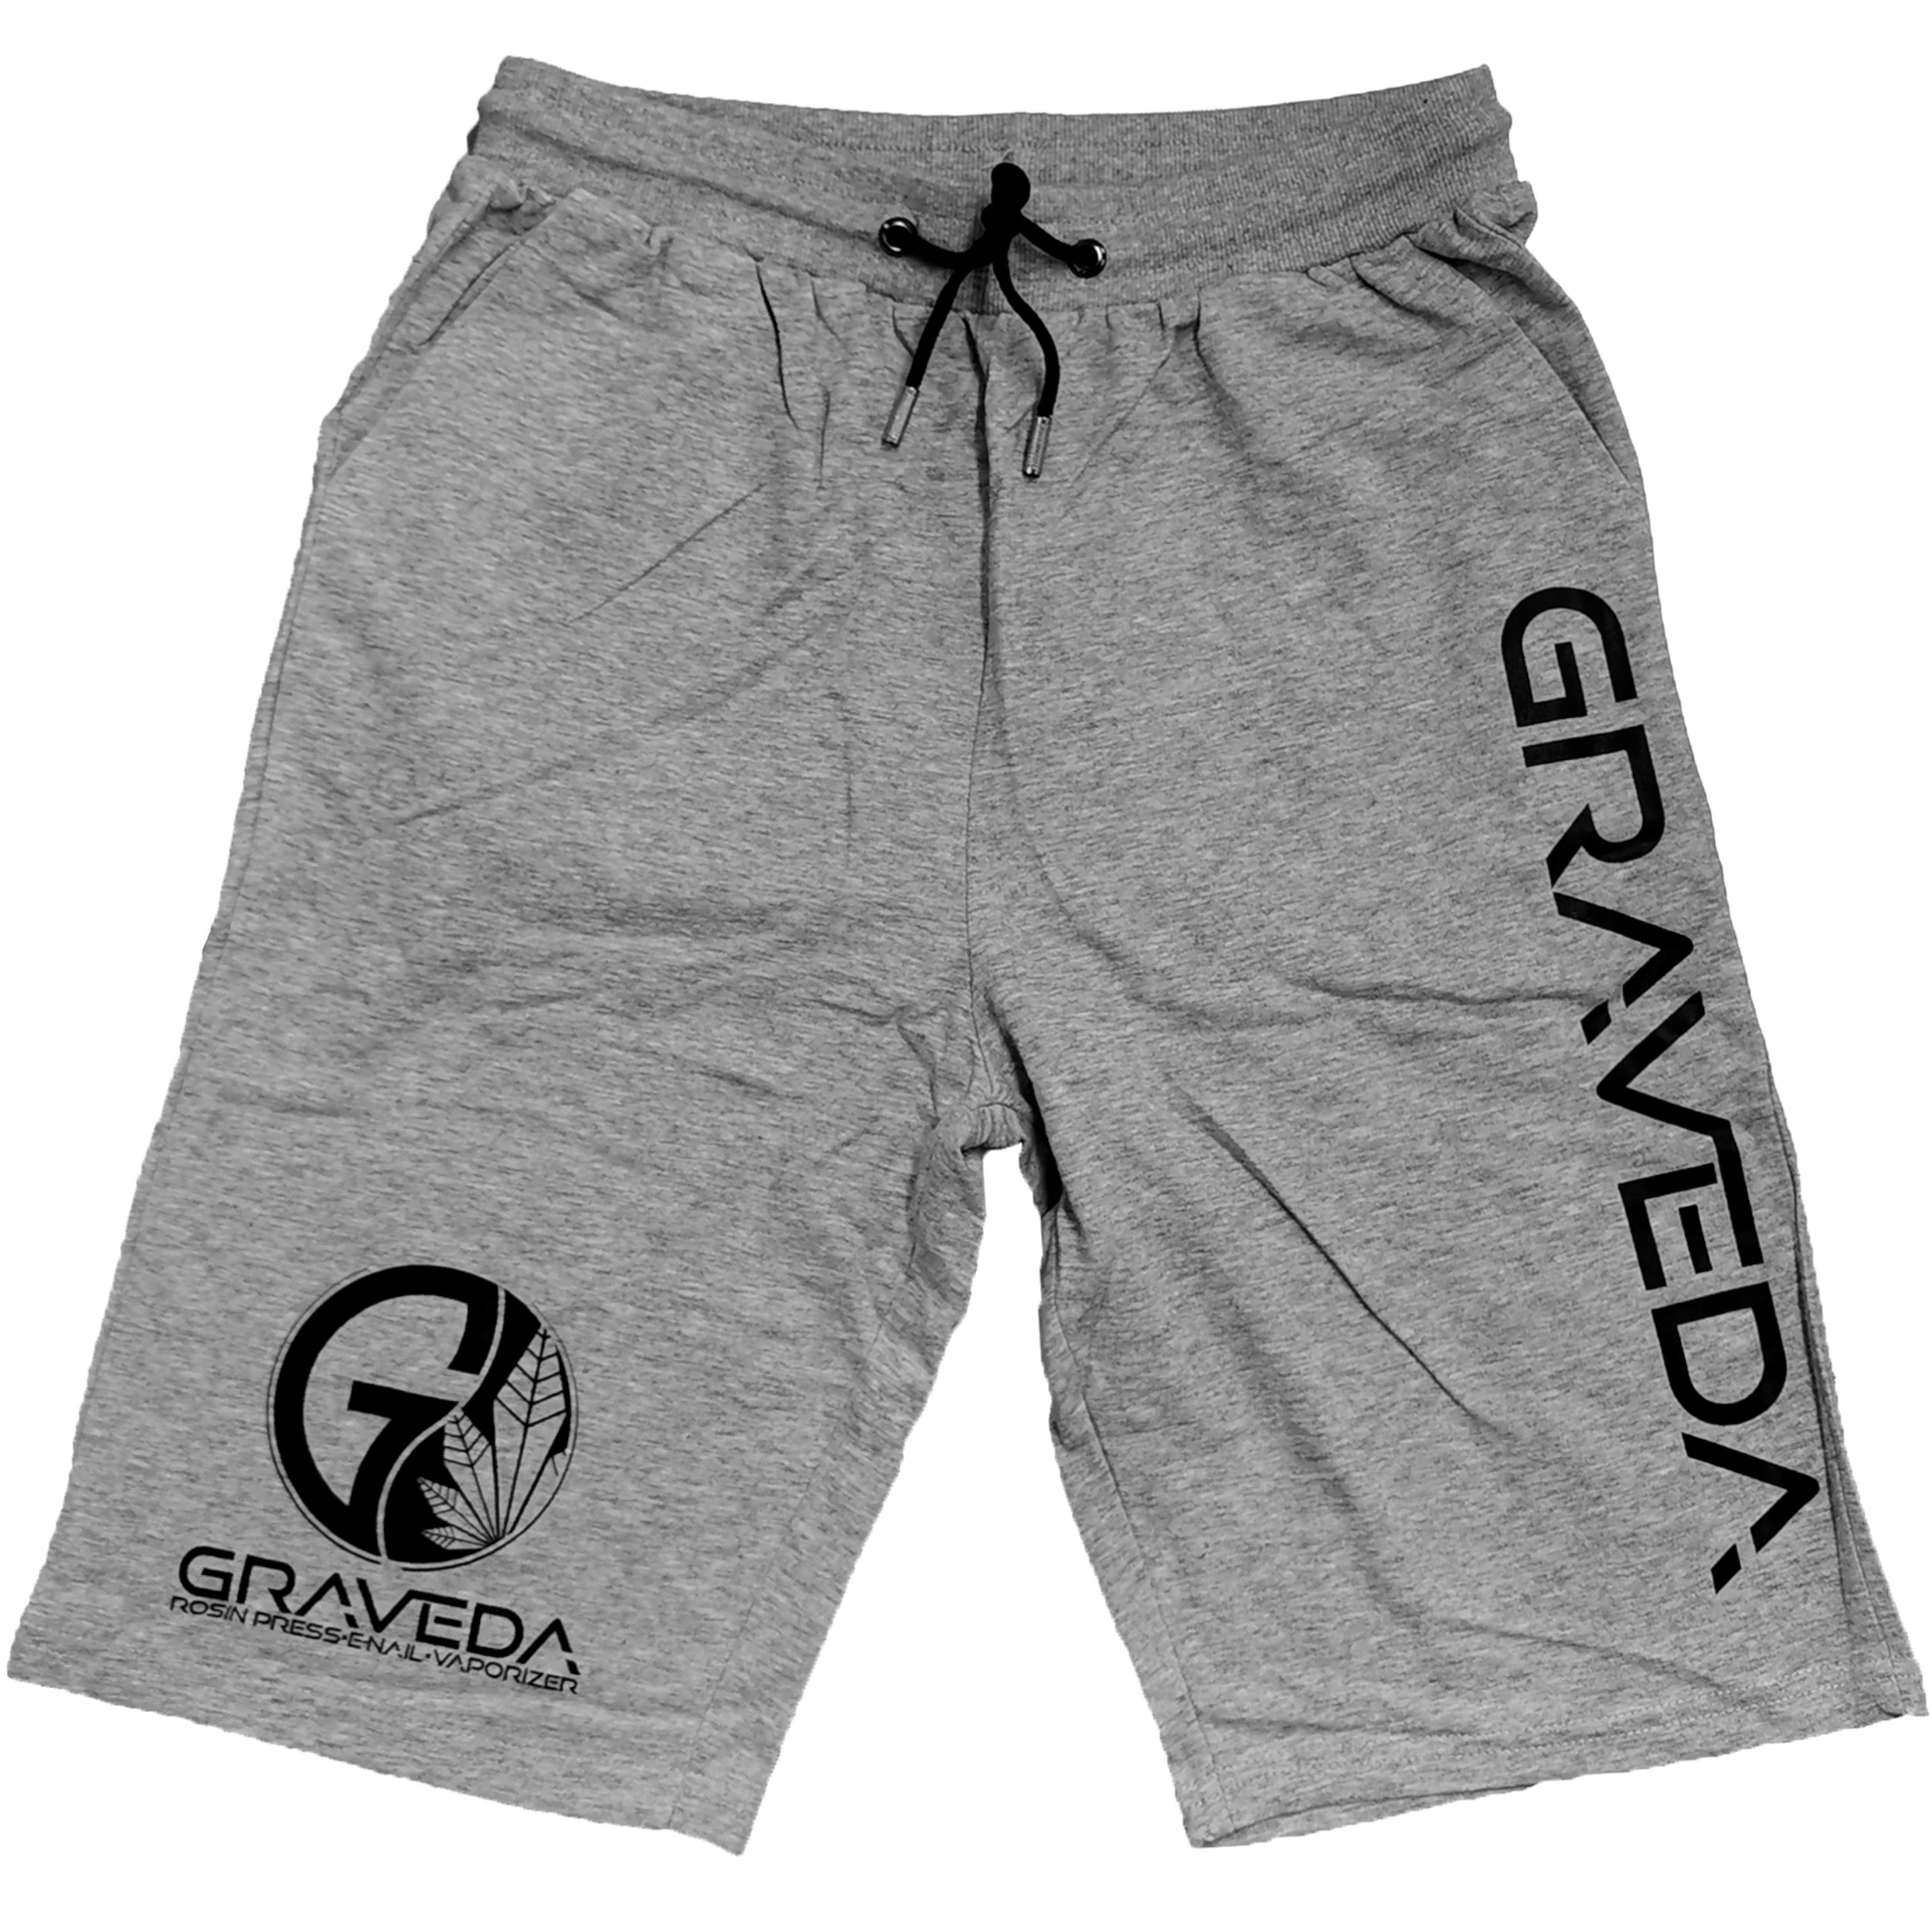 Graveda Shorts, 200g/m², in schwarz oder grau grau M